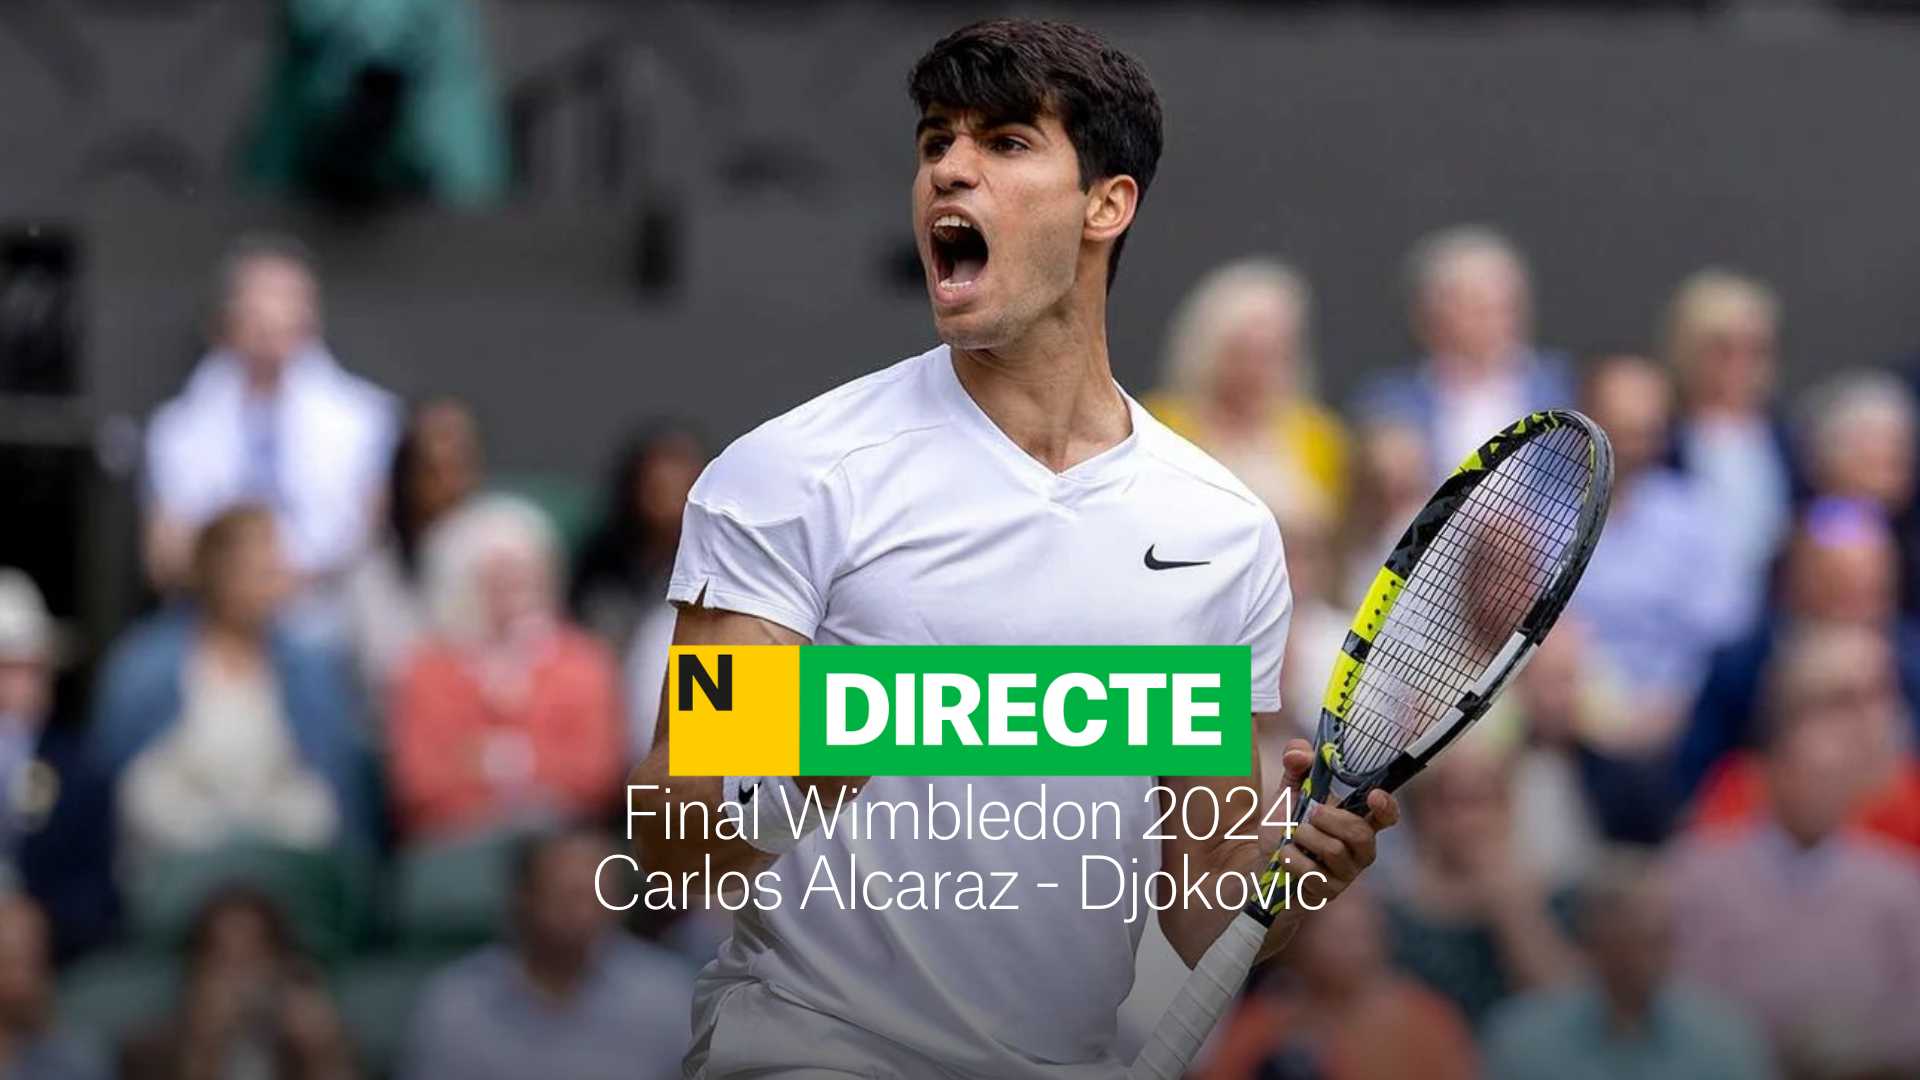 Carlos Alcaraz - Novak Djokovic, final de Wimbledon, Directe | Resultat i resum